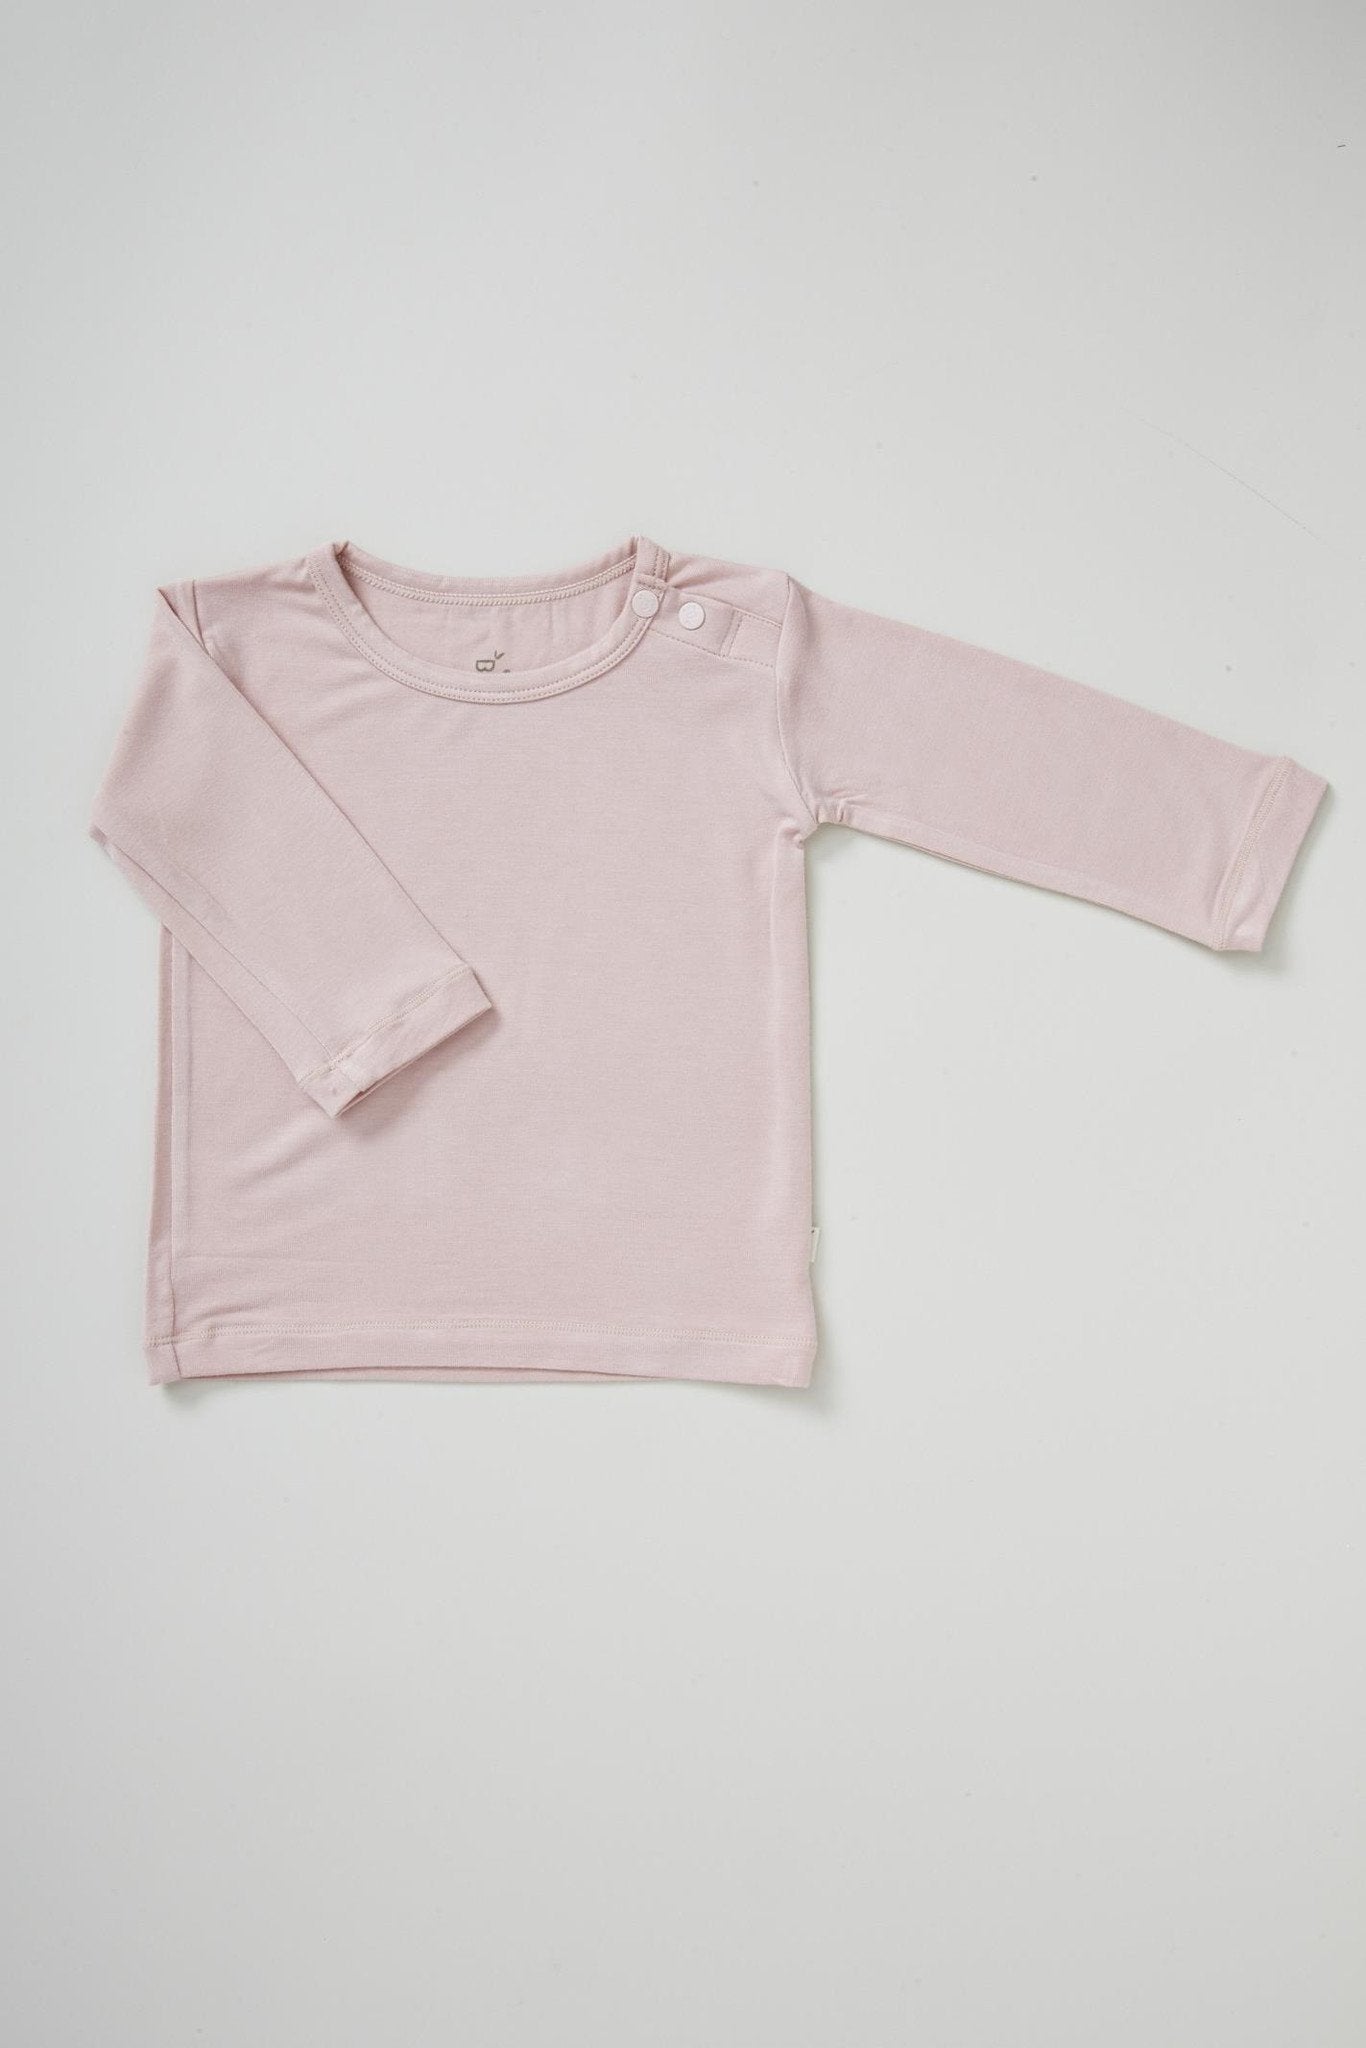 Pink Baby Long Sleeve Top - Boody Baby Organic Bamboo Eco Wear